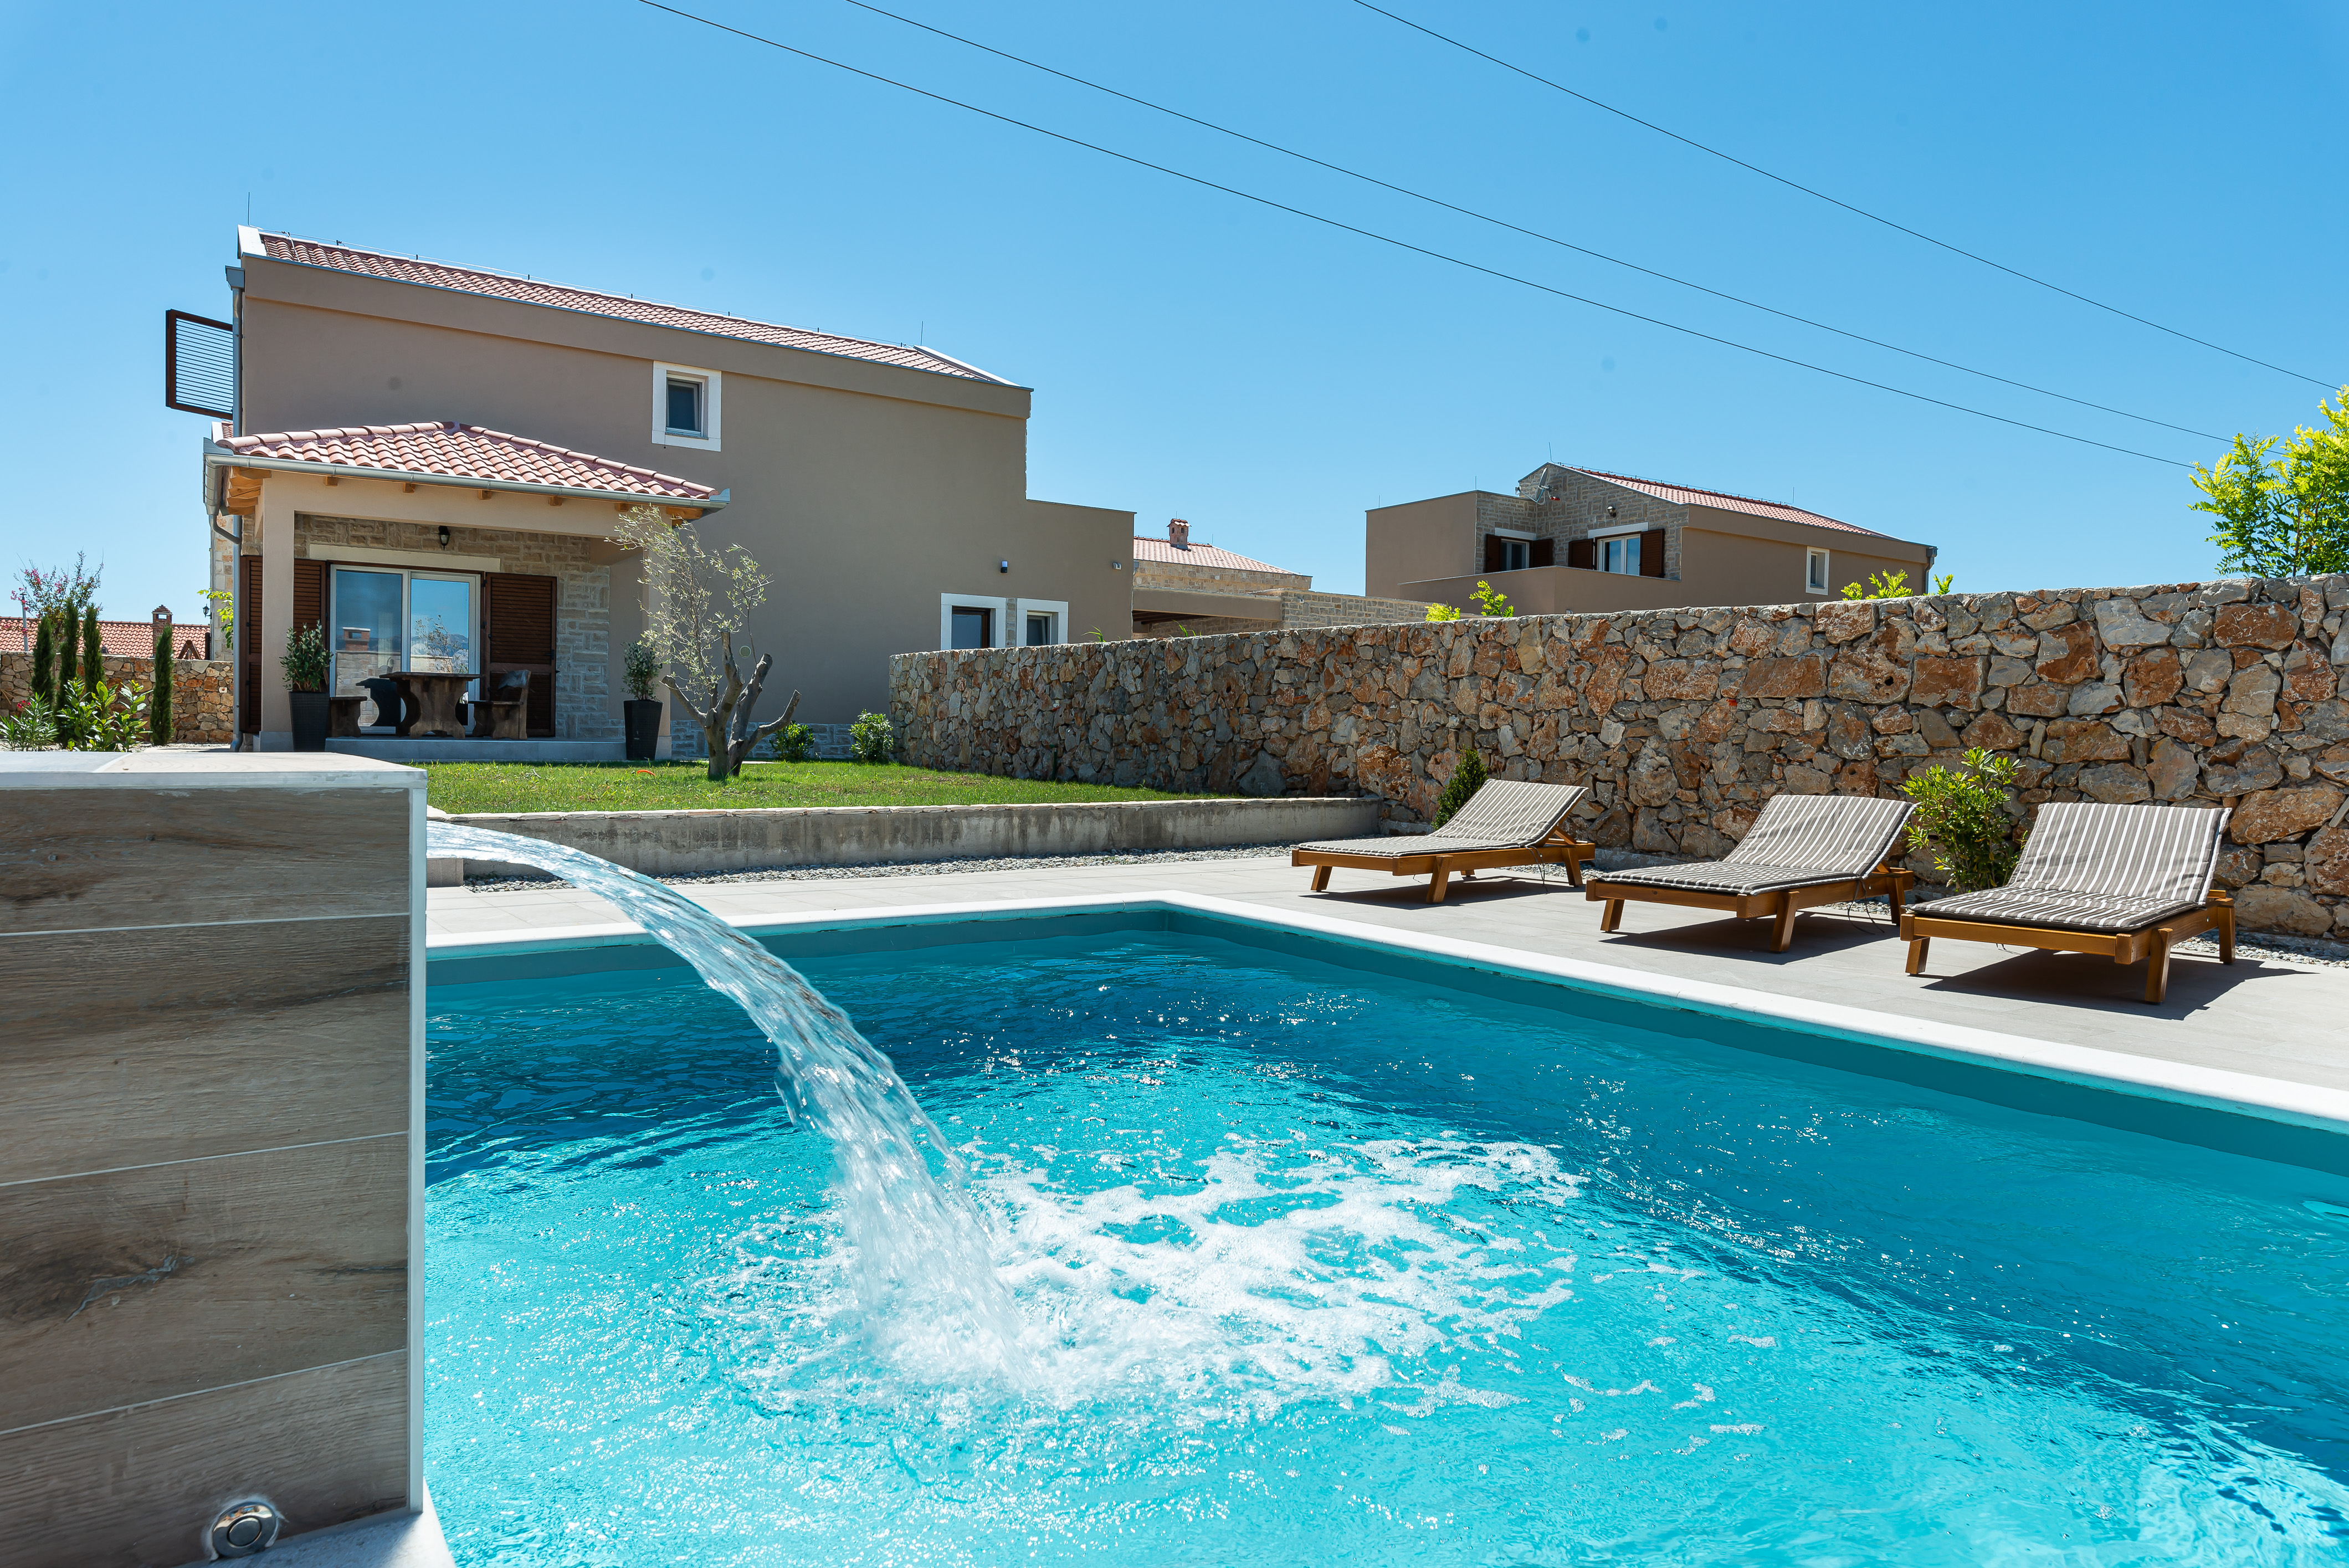 Brand new luxury villa with swimming pool, sauna, close to the sandy beach